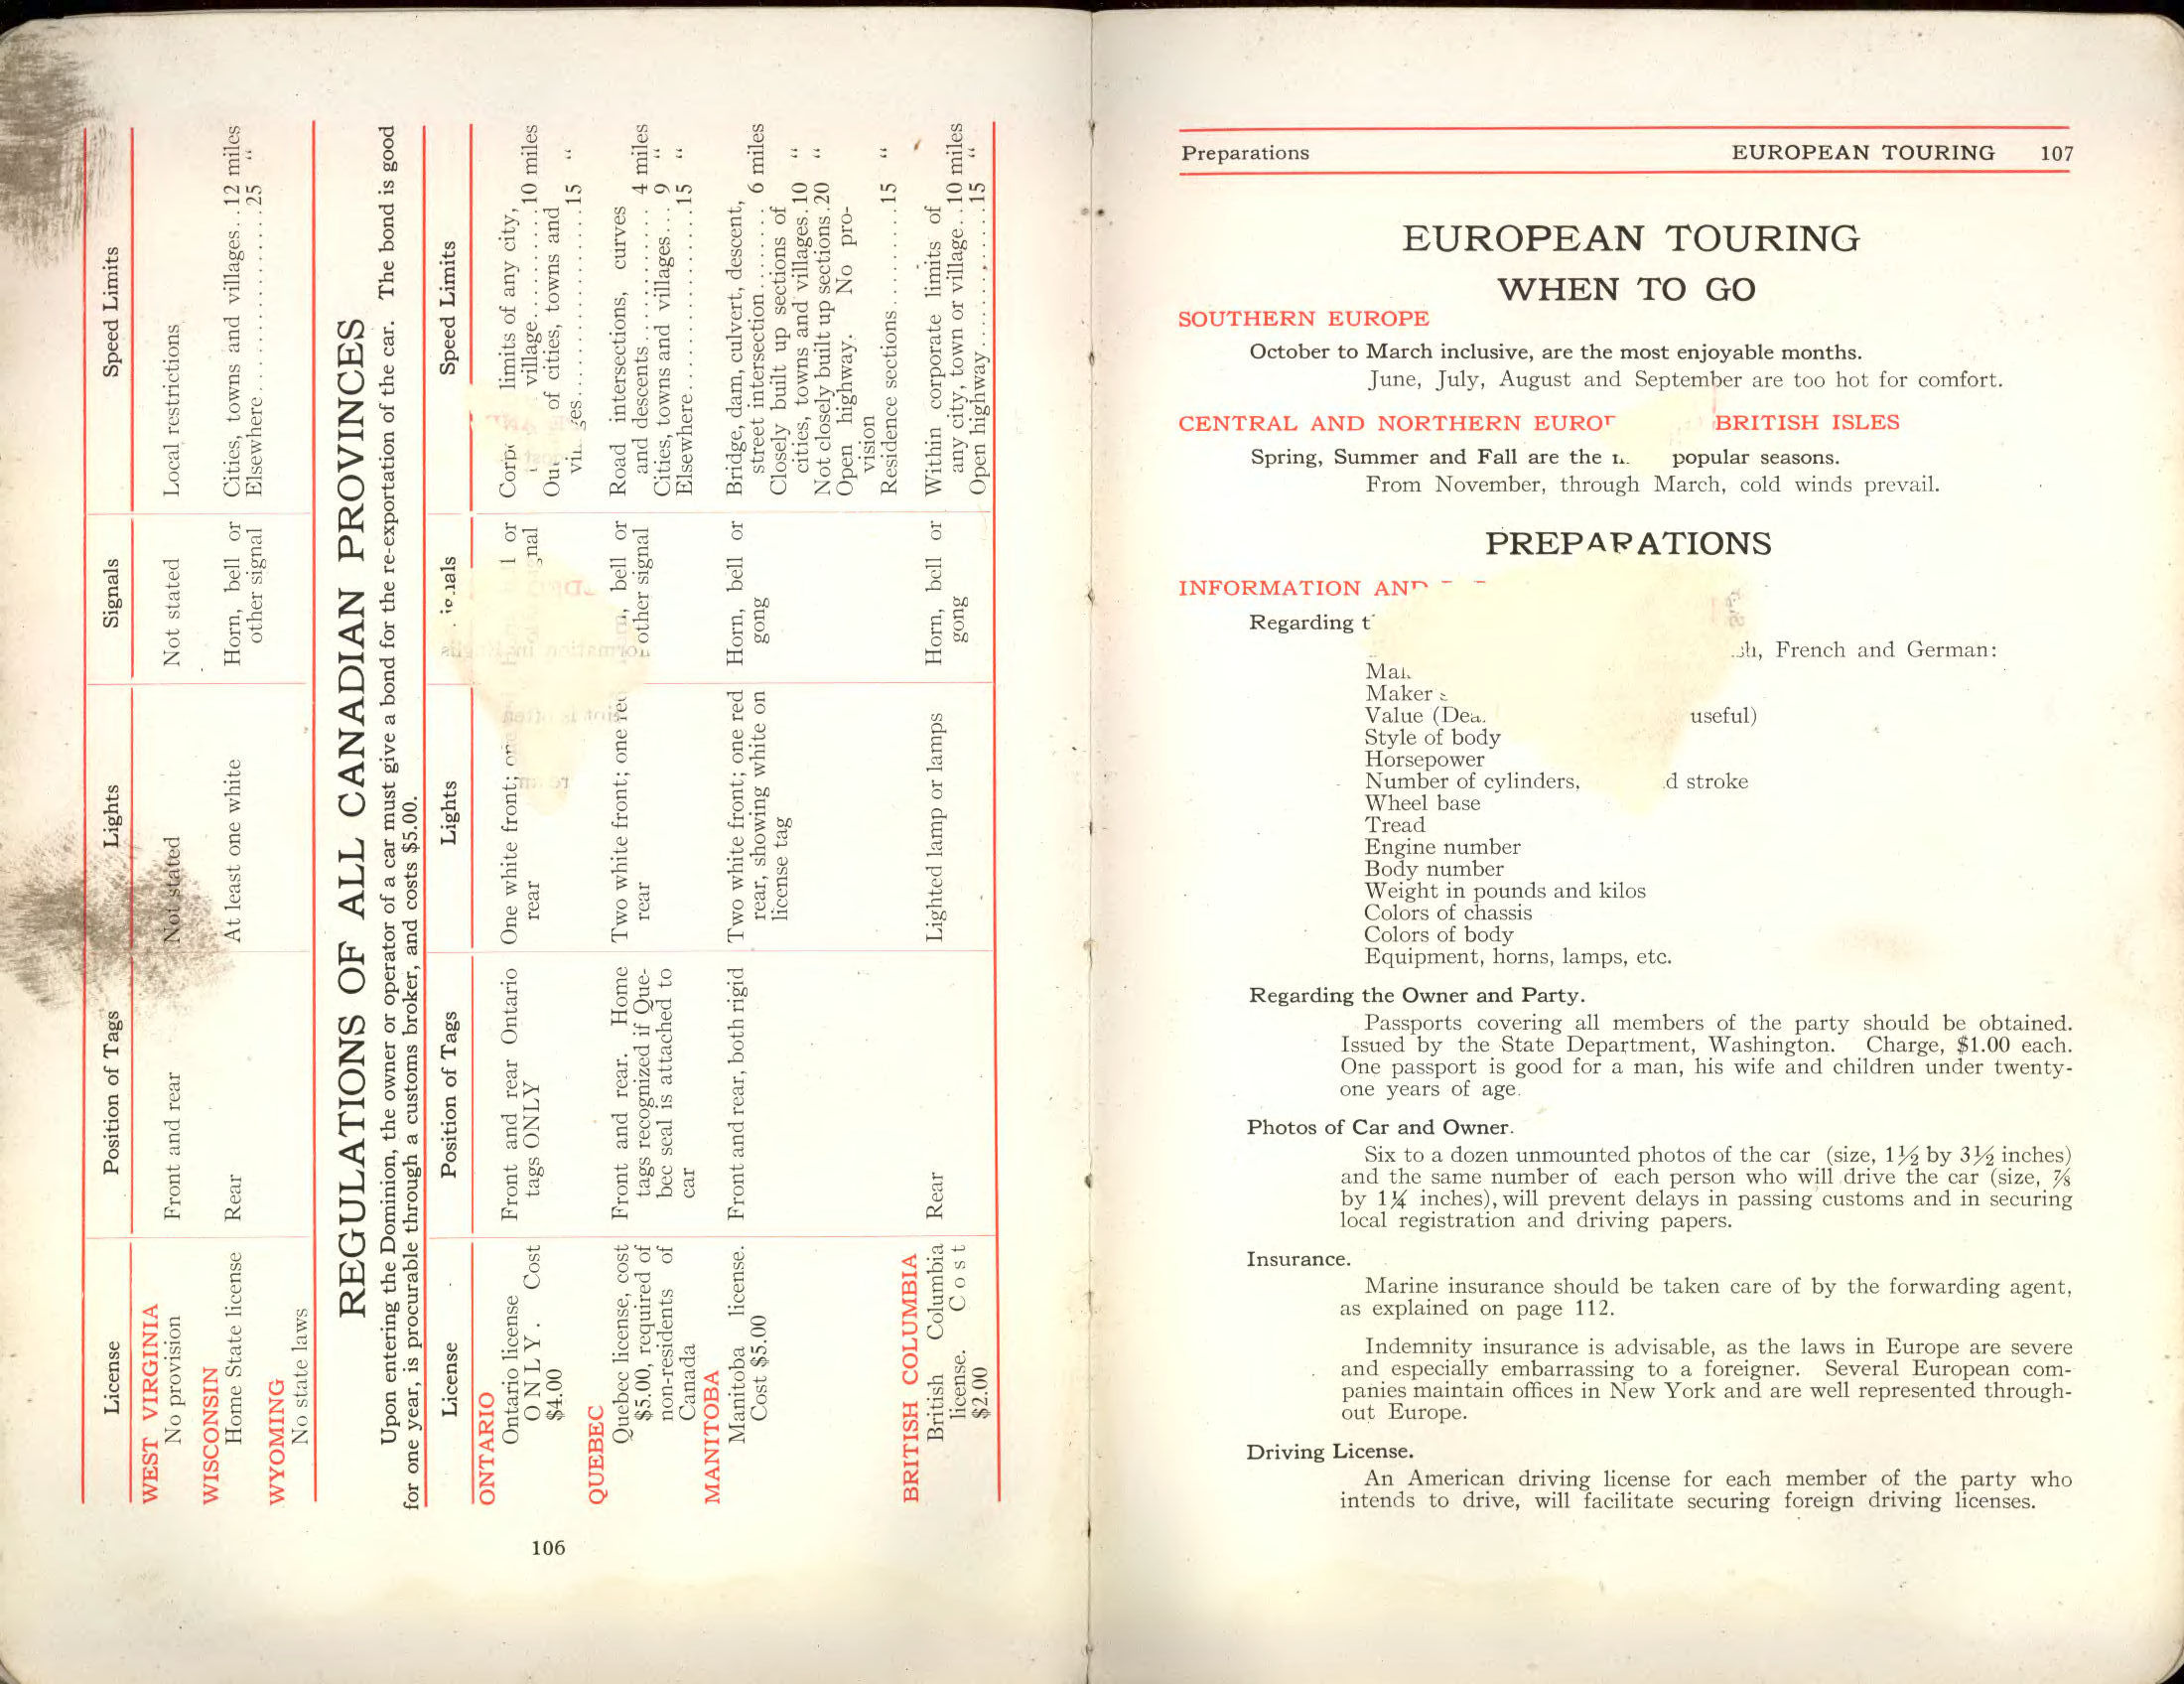 1911 Packard Manual-106-107